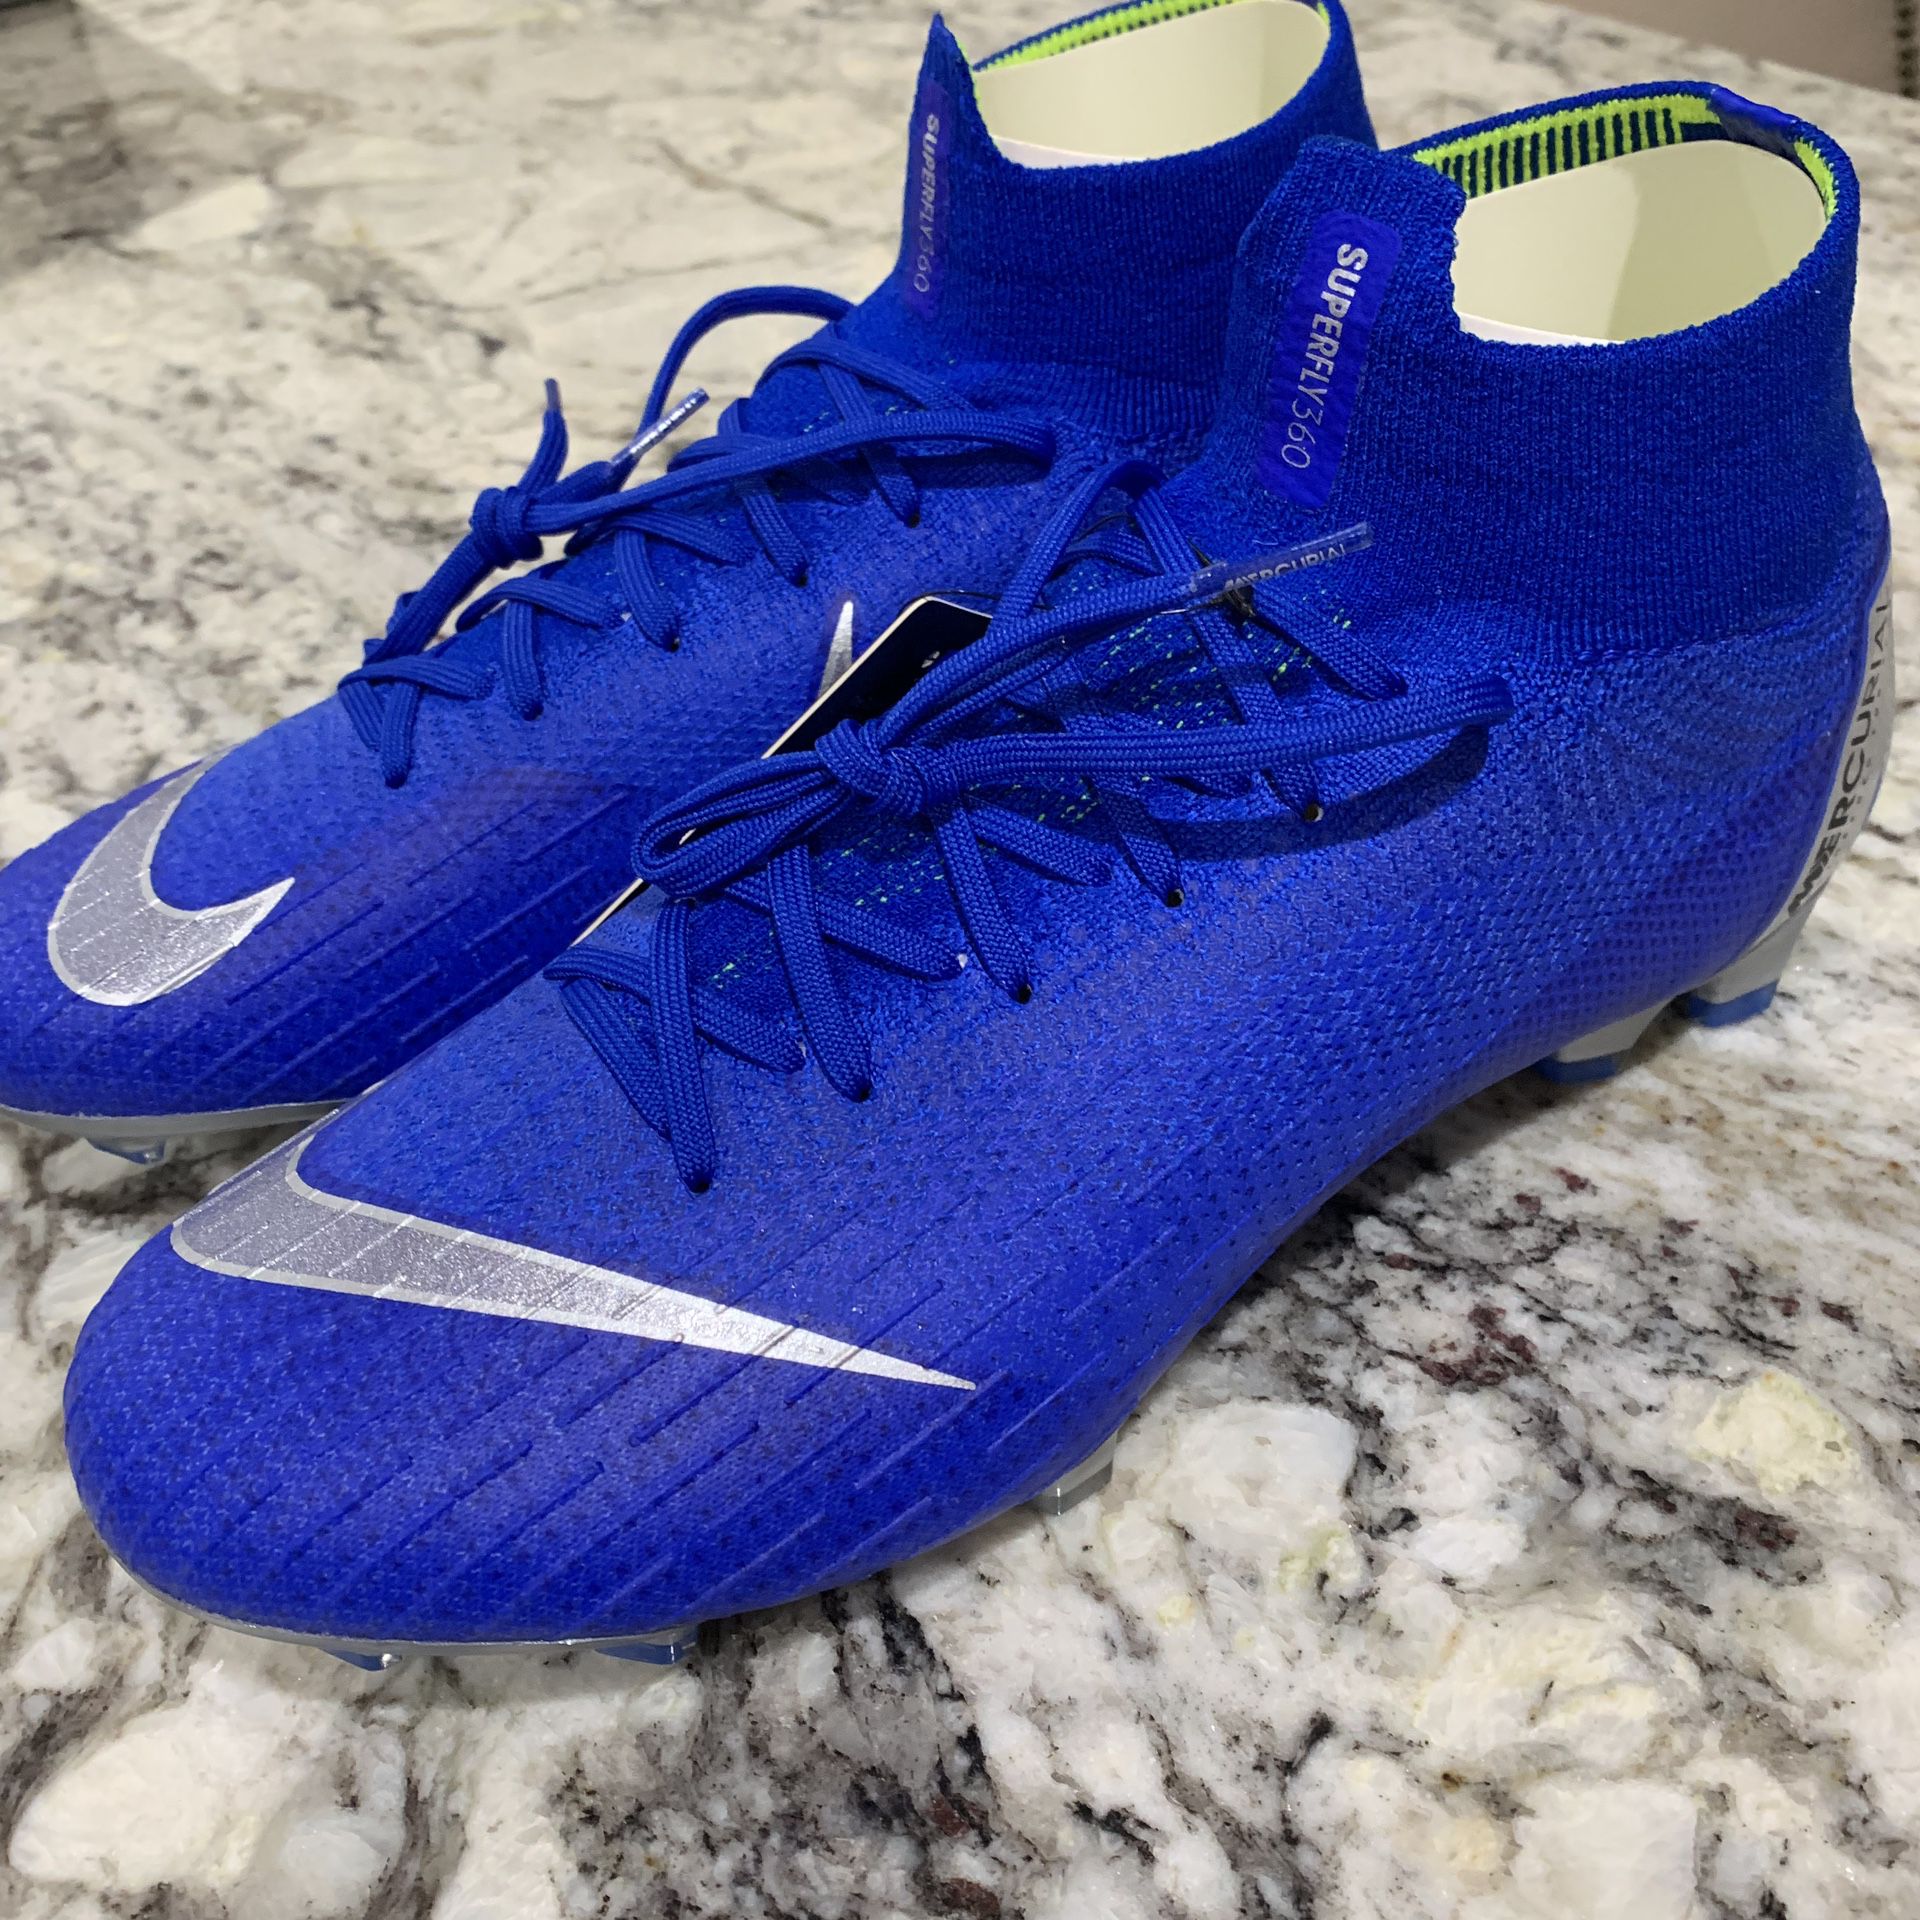 Nike Superfly 6 Elite FG Soccer Cleat Men’s Racer Blue AH7365-400 MSRP$275